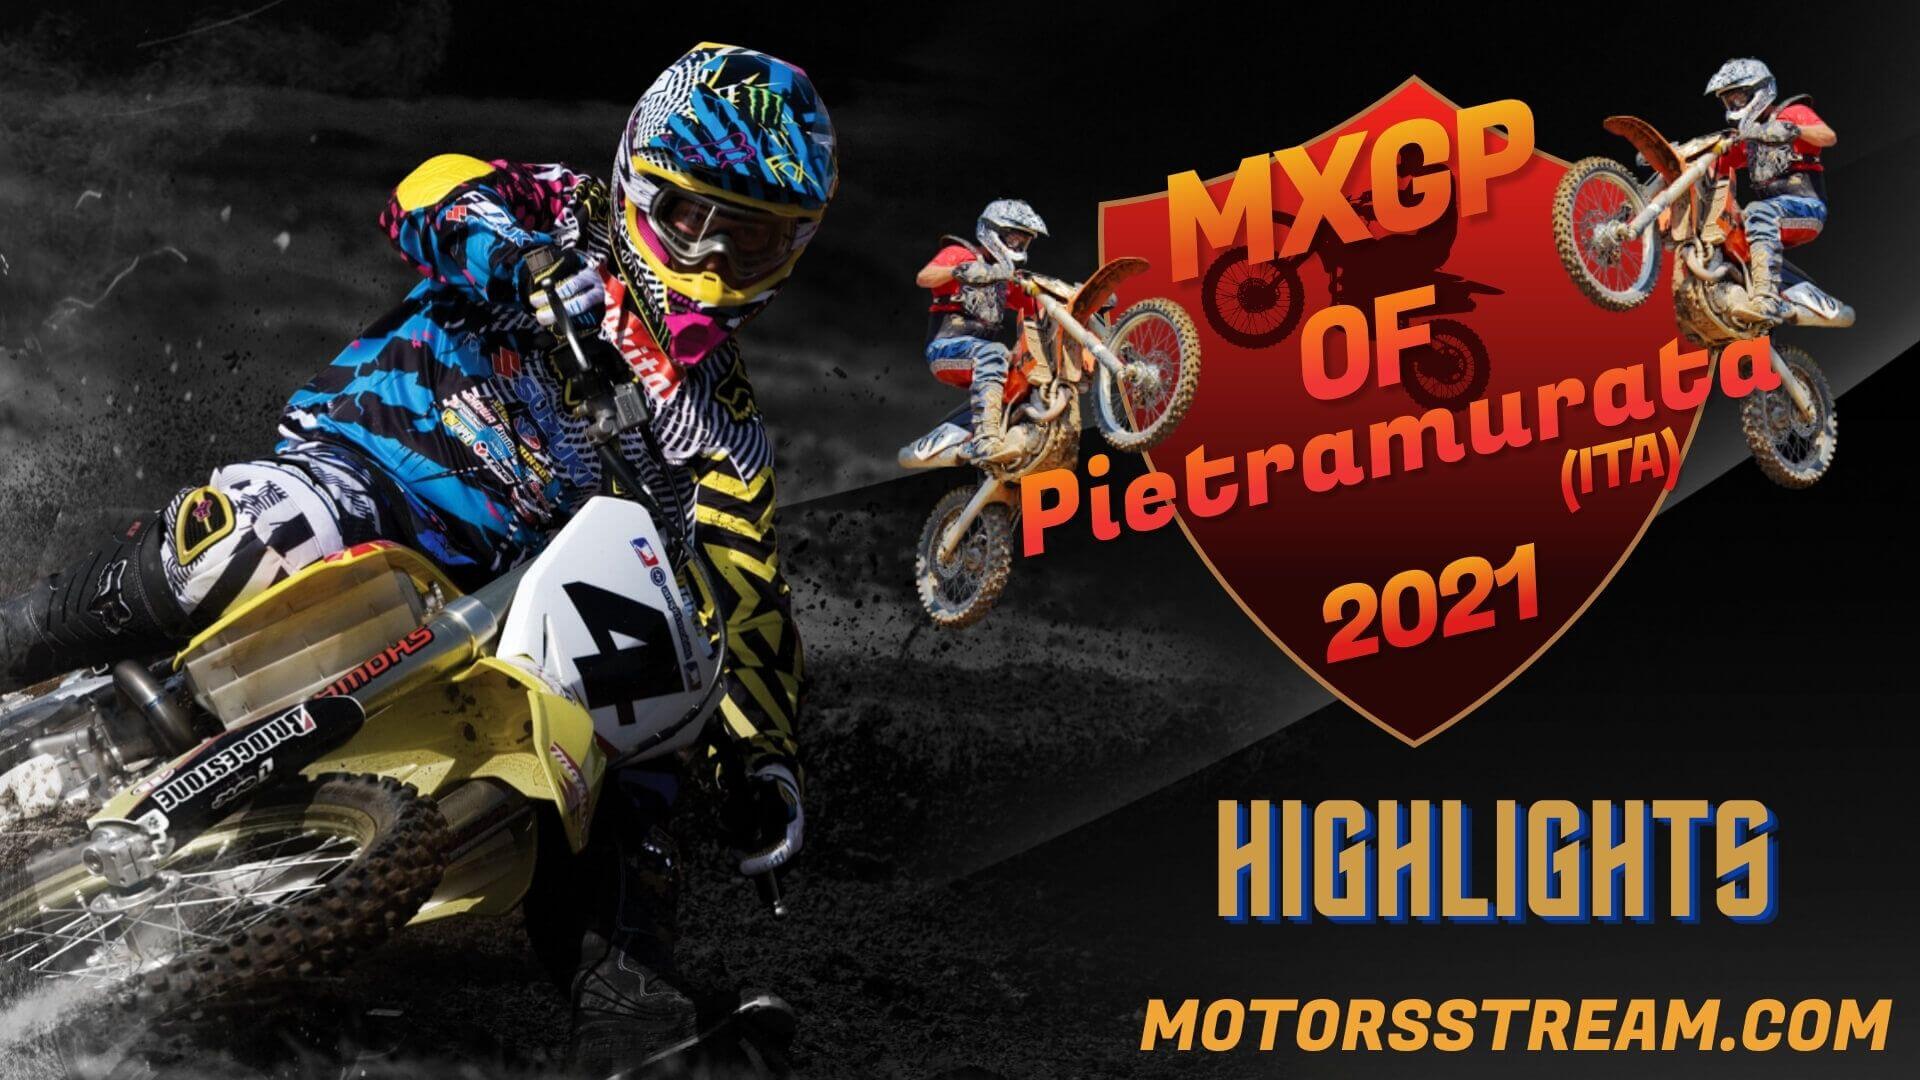 FIM Motocross Pietramurata Highlights 2021 MXGP